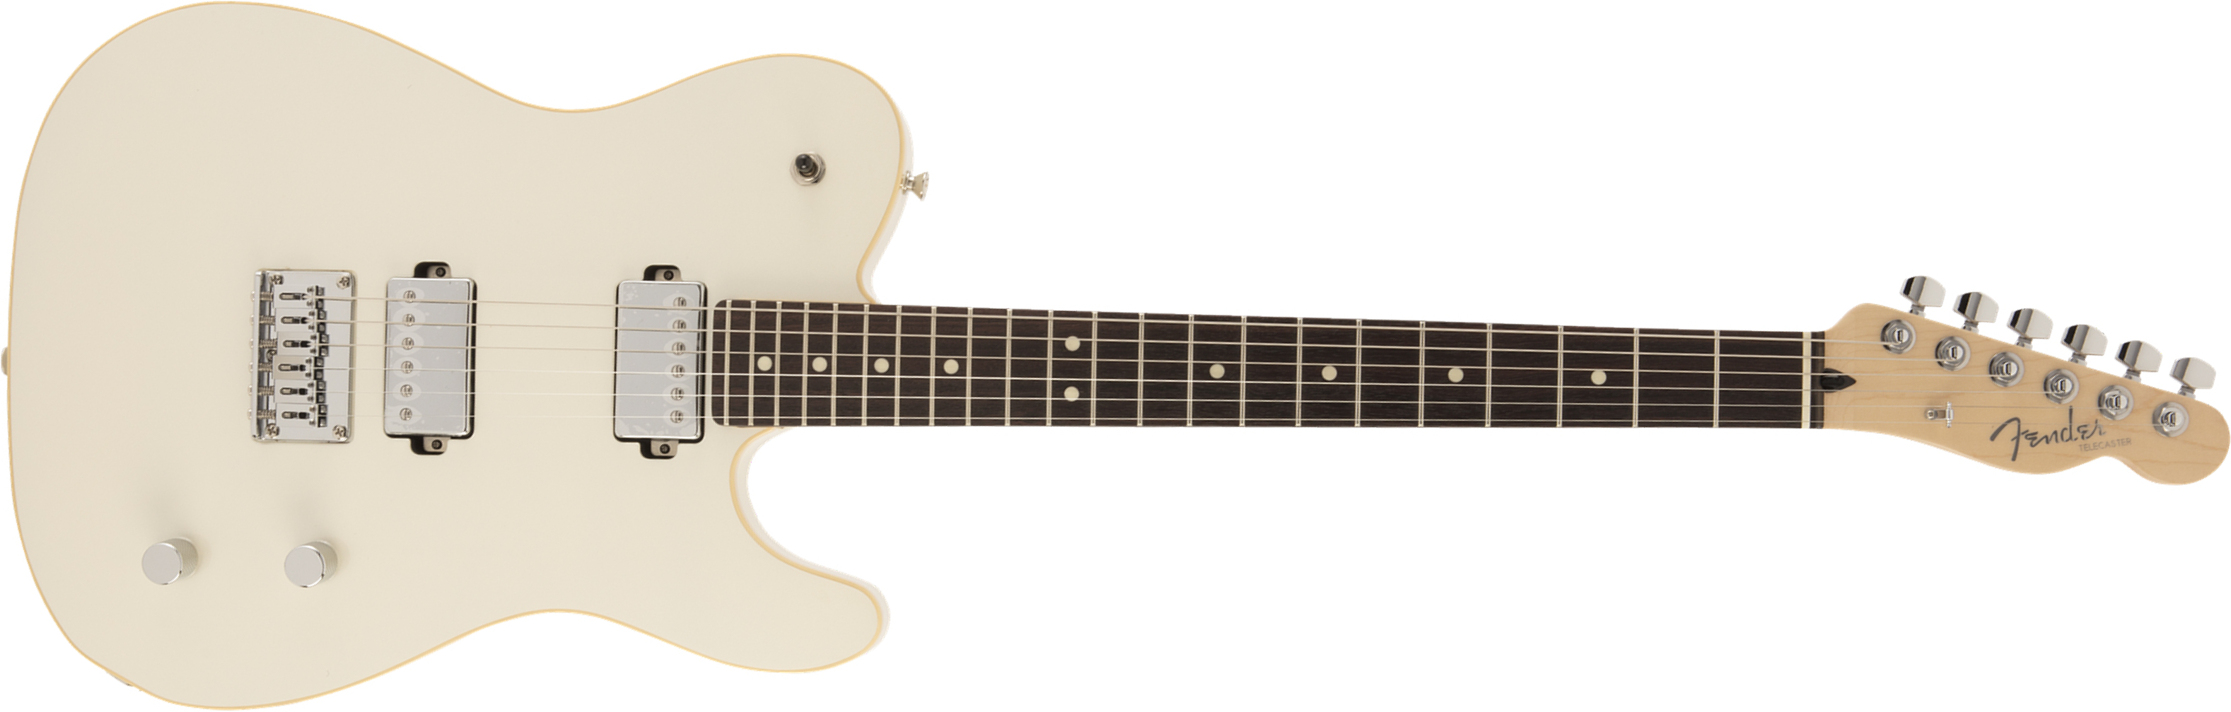 Fender Tele Modern Hh Jap 2h Ht Rw - Olympic Pearl - Guitarra eléctrica con forma de tel - Main picture